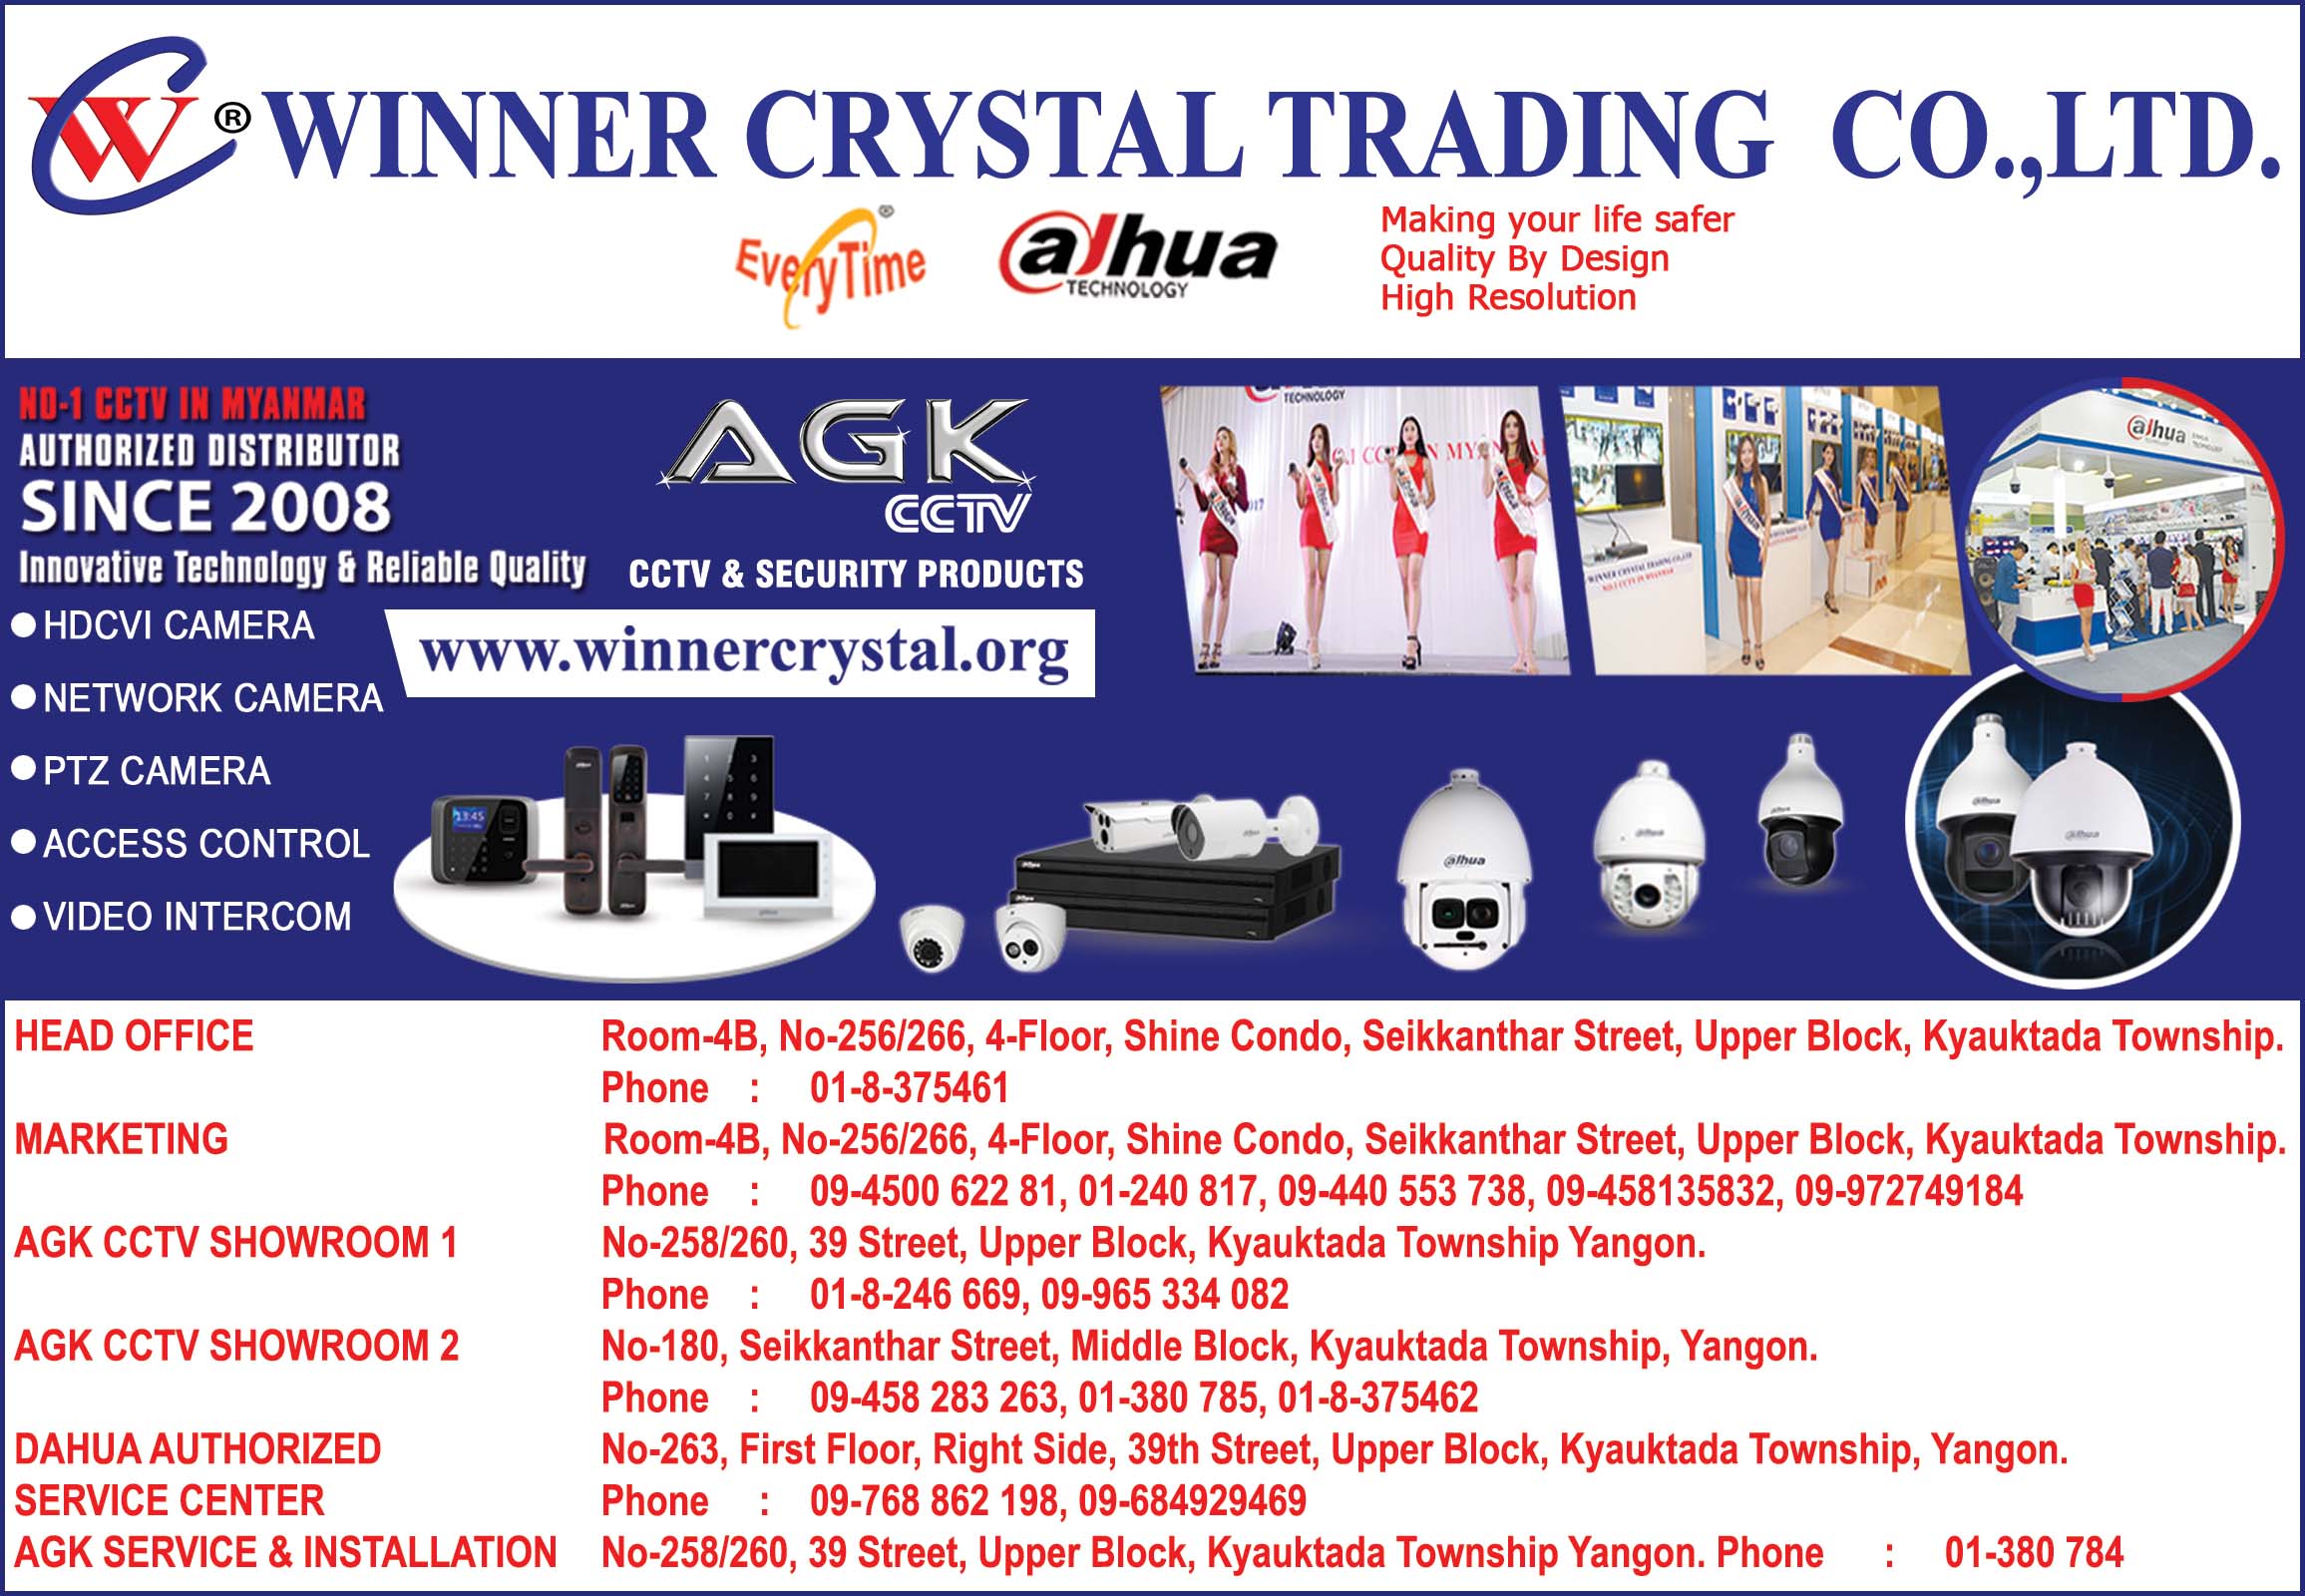 Winner Crystal Trading Co., Ltd.